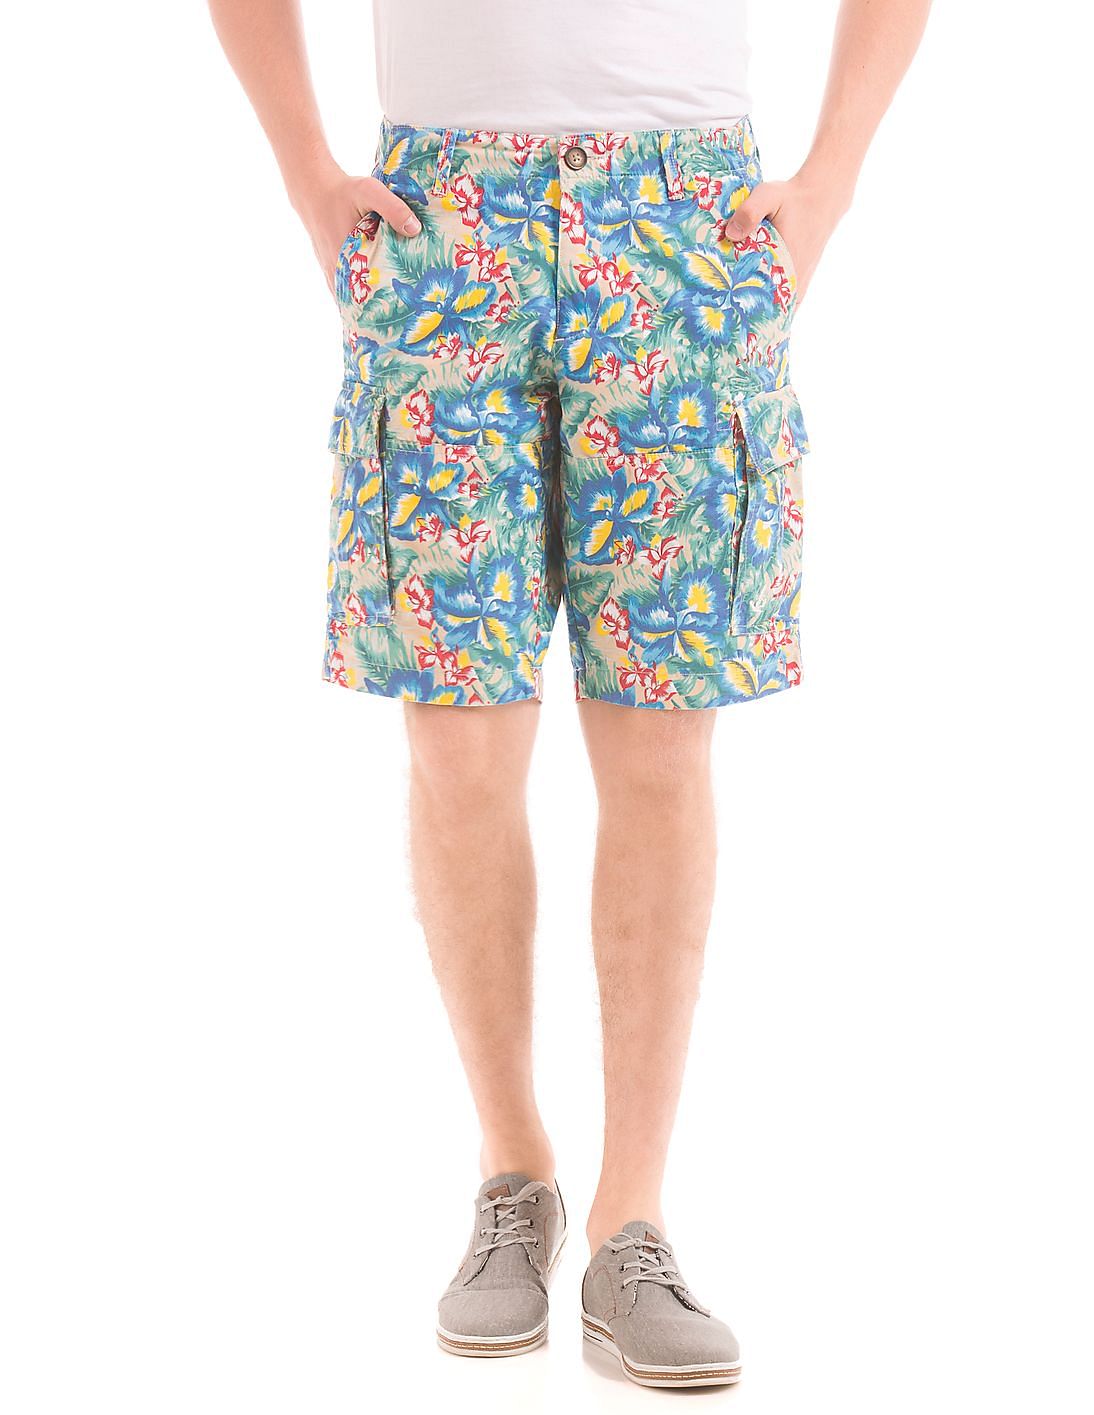 Buy Bayisland Men Tropical Print Cargo Shorts - NNNOW.com